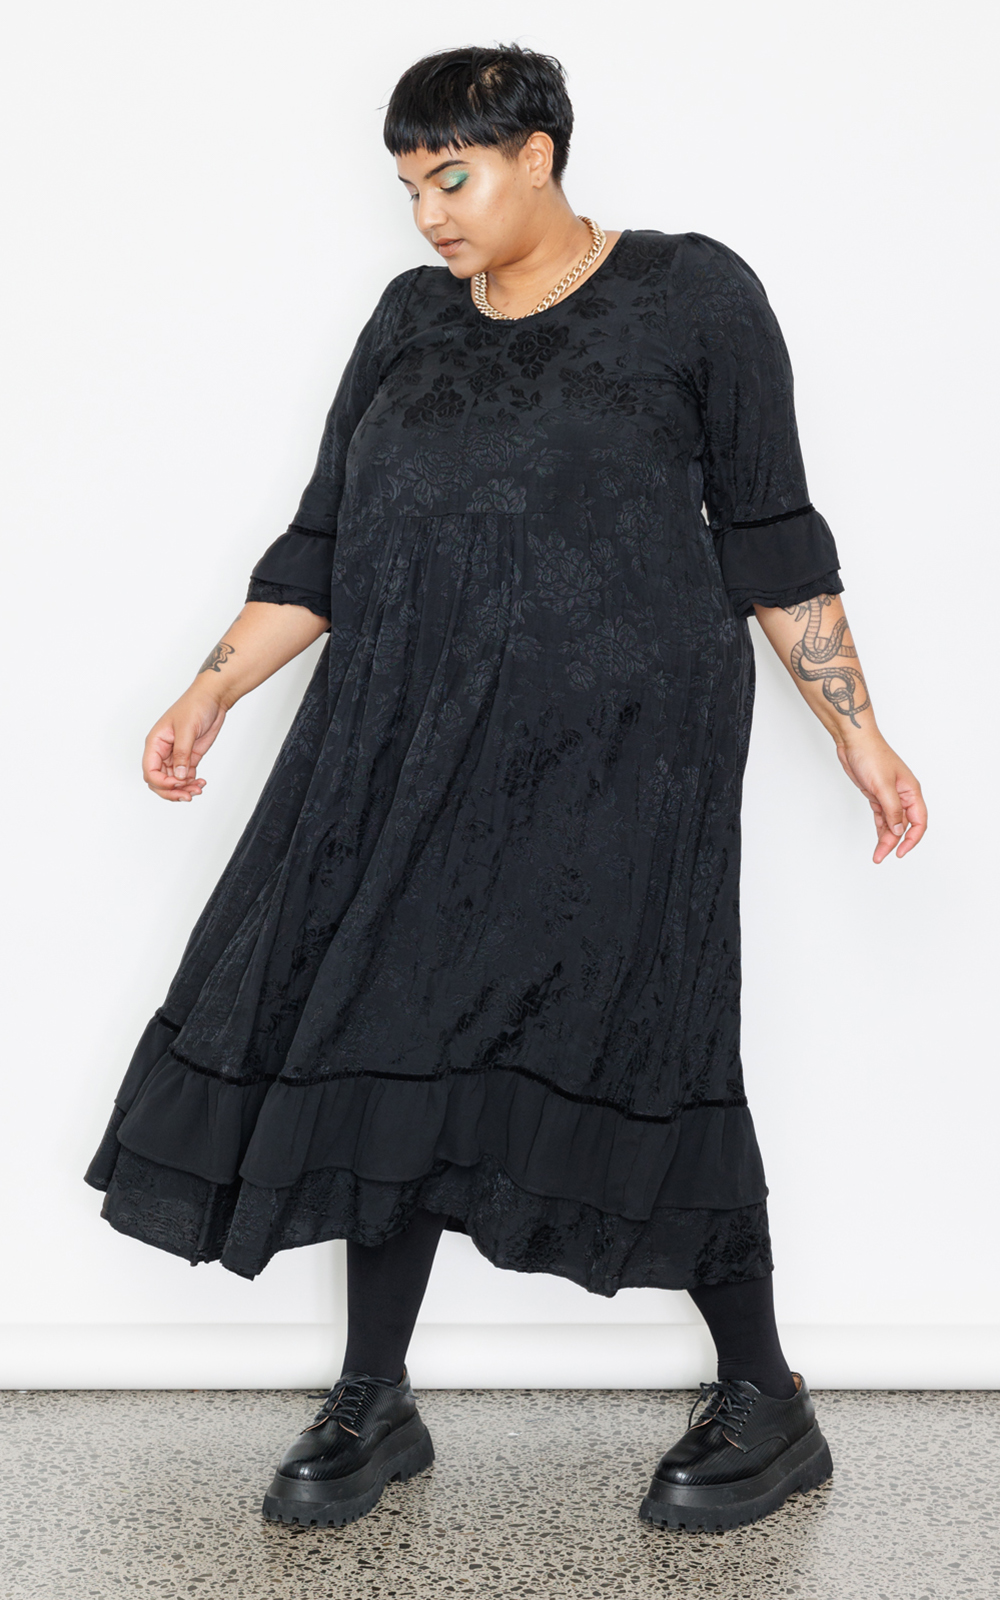 Ophelia Dress In Jacquard product photo.